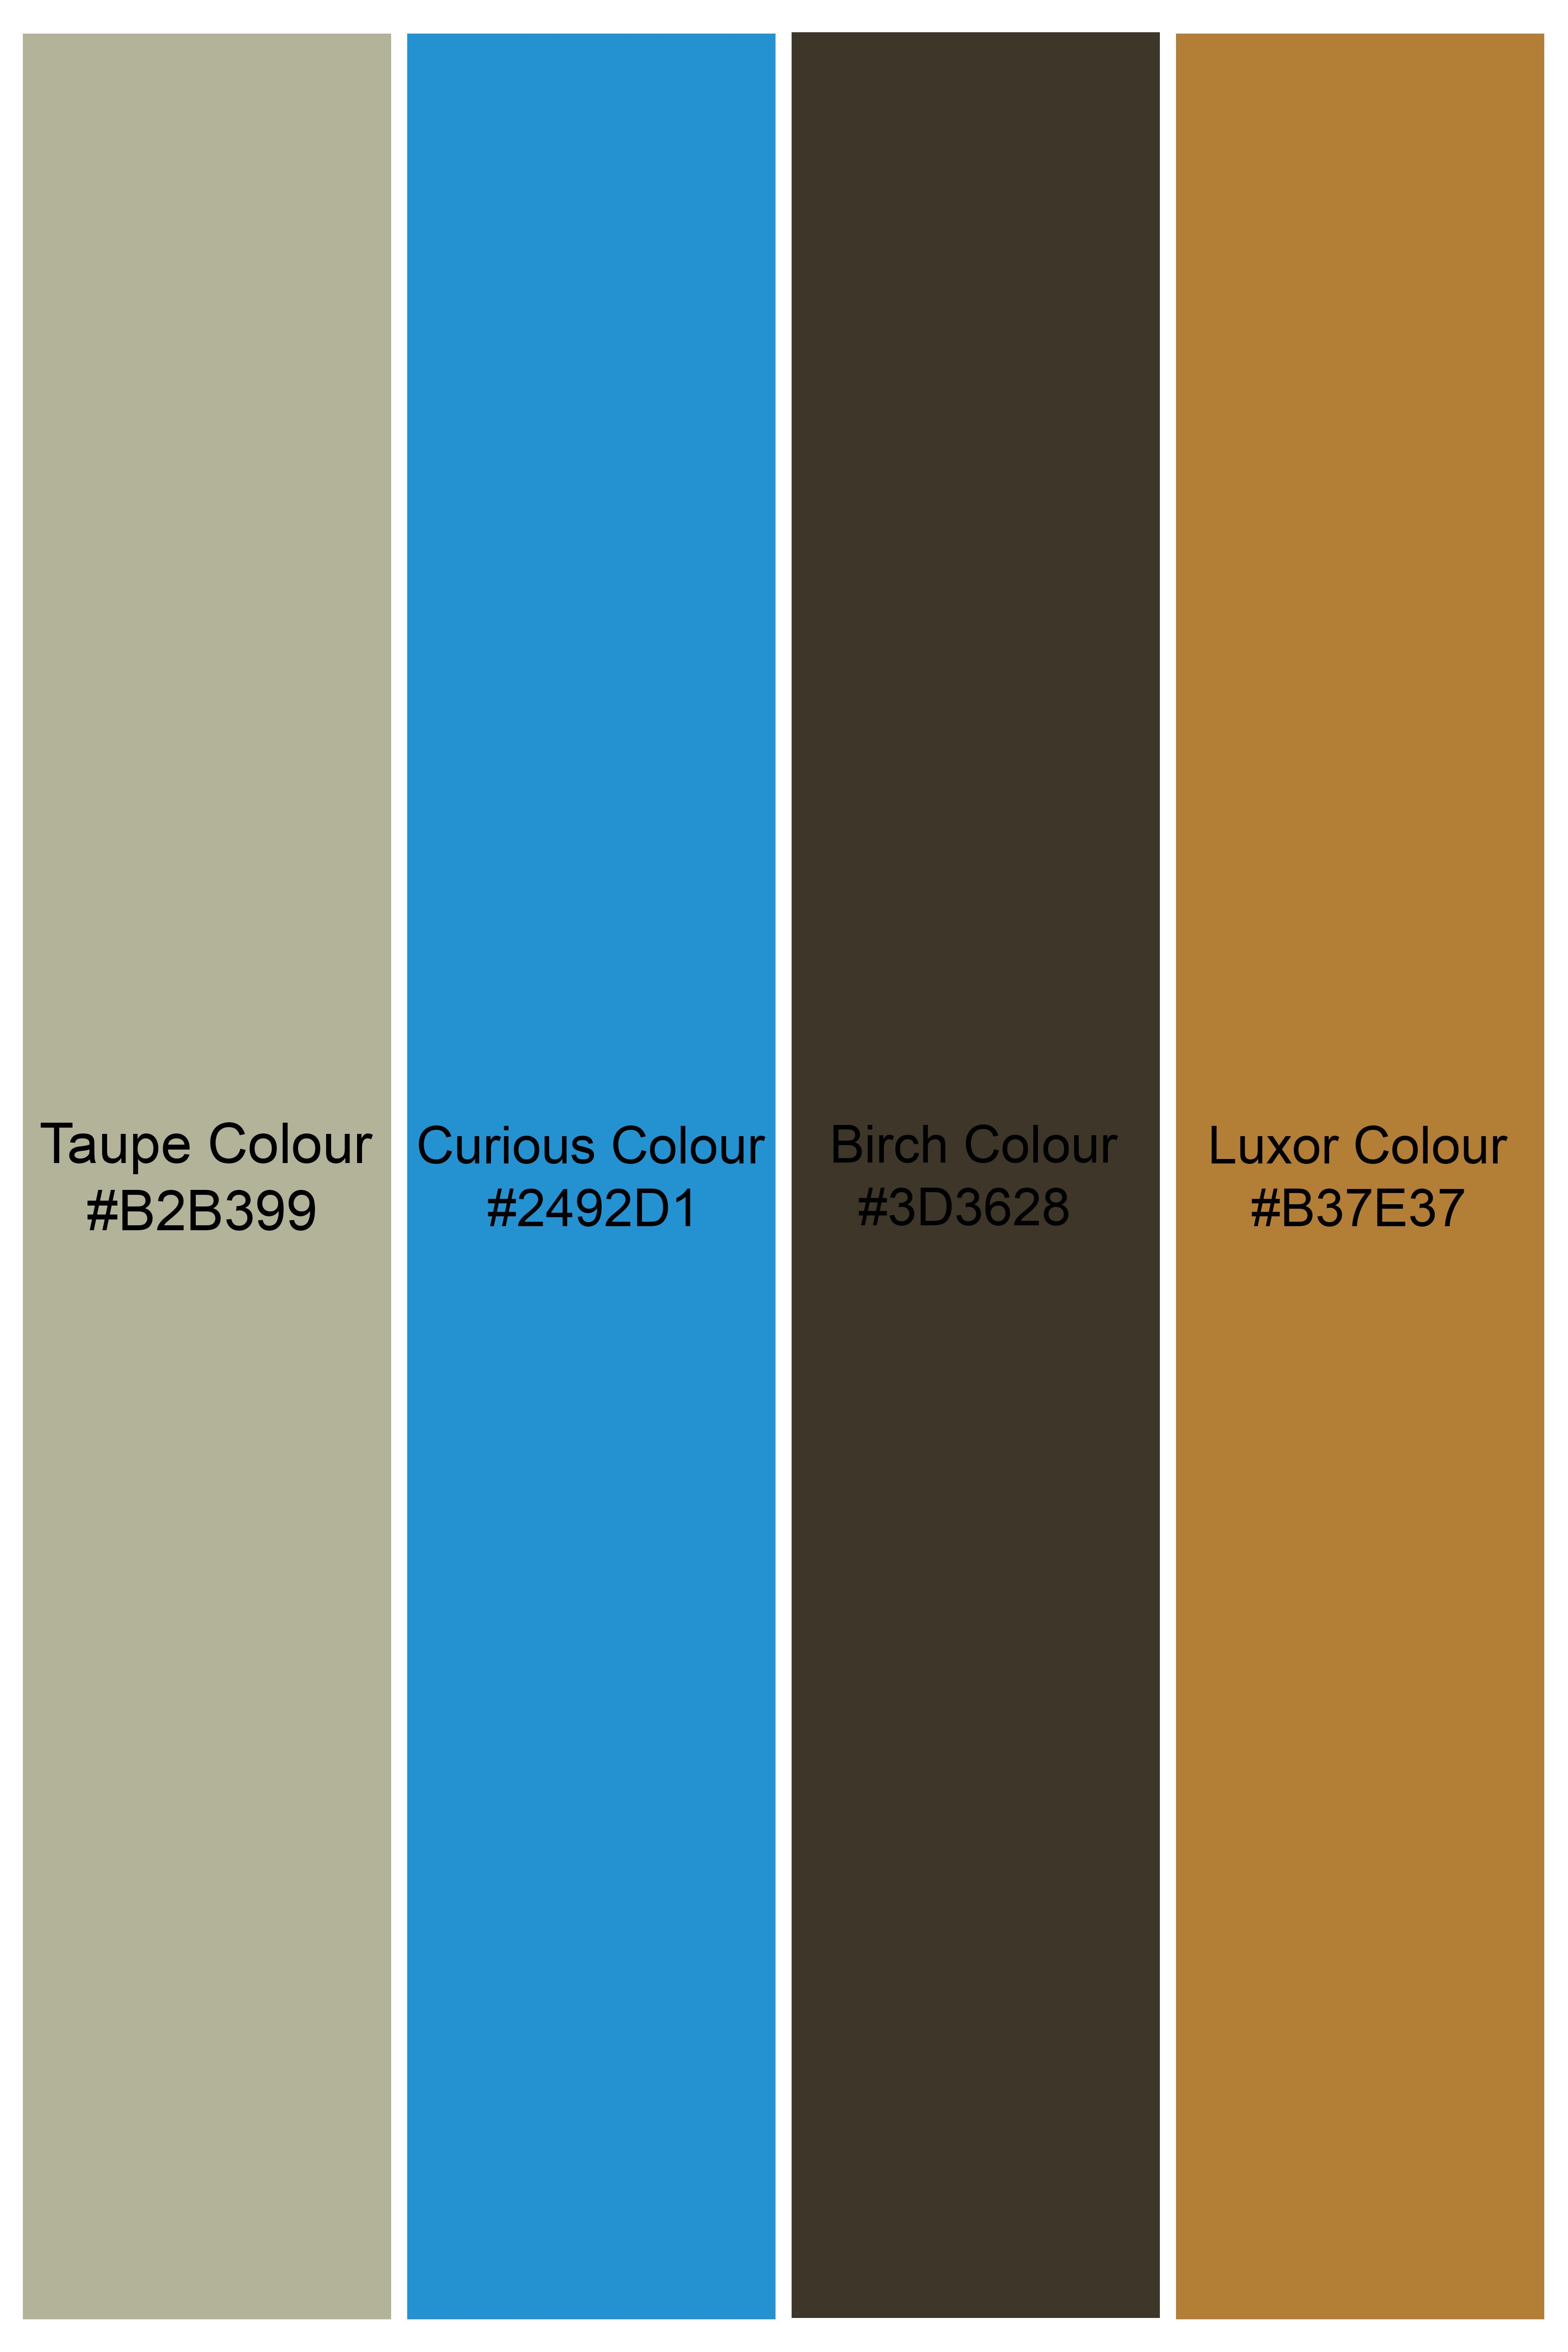 Taupe Green and Curious Blue Multicolour Ethnic Printed Subtle Sheen Super Soft Premium Cotton Shirt 11717-CC-BLE-SS-38, 11717-CC-BLE-SS-39, 11717-CC-BLE-SS-40, 11717-CC-BLE-SS-42, 11717-CC-BLE-SS-44, 11717-CC-BLE-SS-46, 11717-CC-BLE-SS-48, 11717-CC-BLE-SS-50, 11717-CC-BLE-SS-52